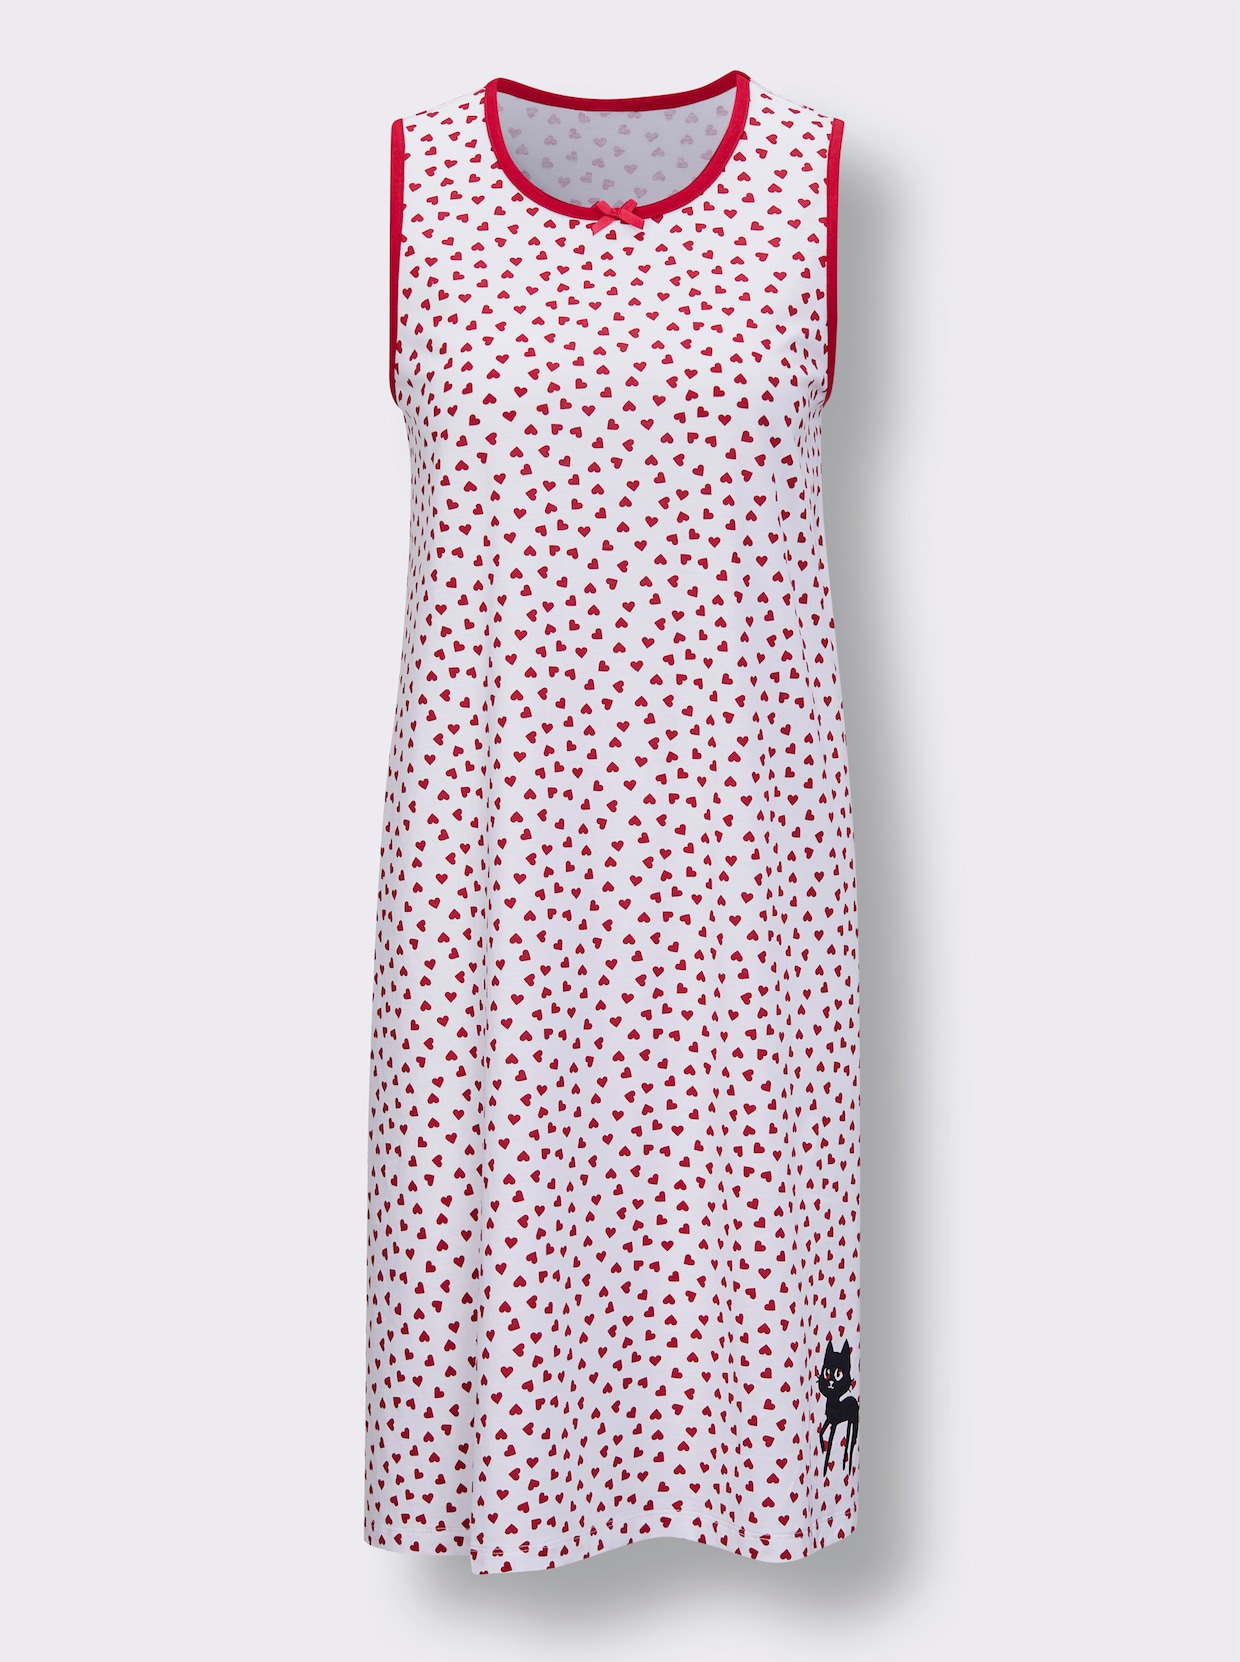 wäschepur Slaapshirts - wit/zwart bedrukt + wit/rood bedrukt